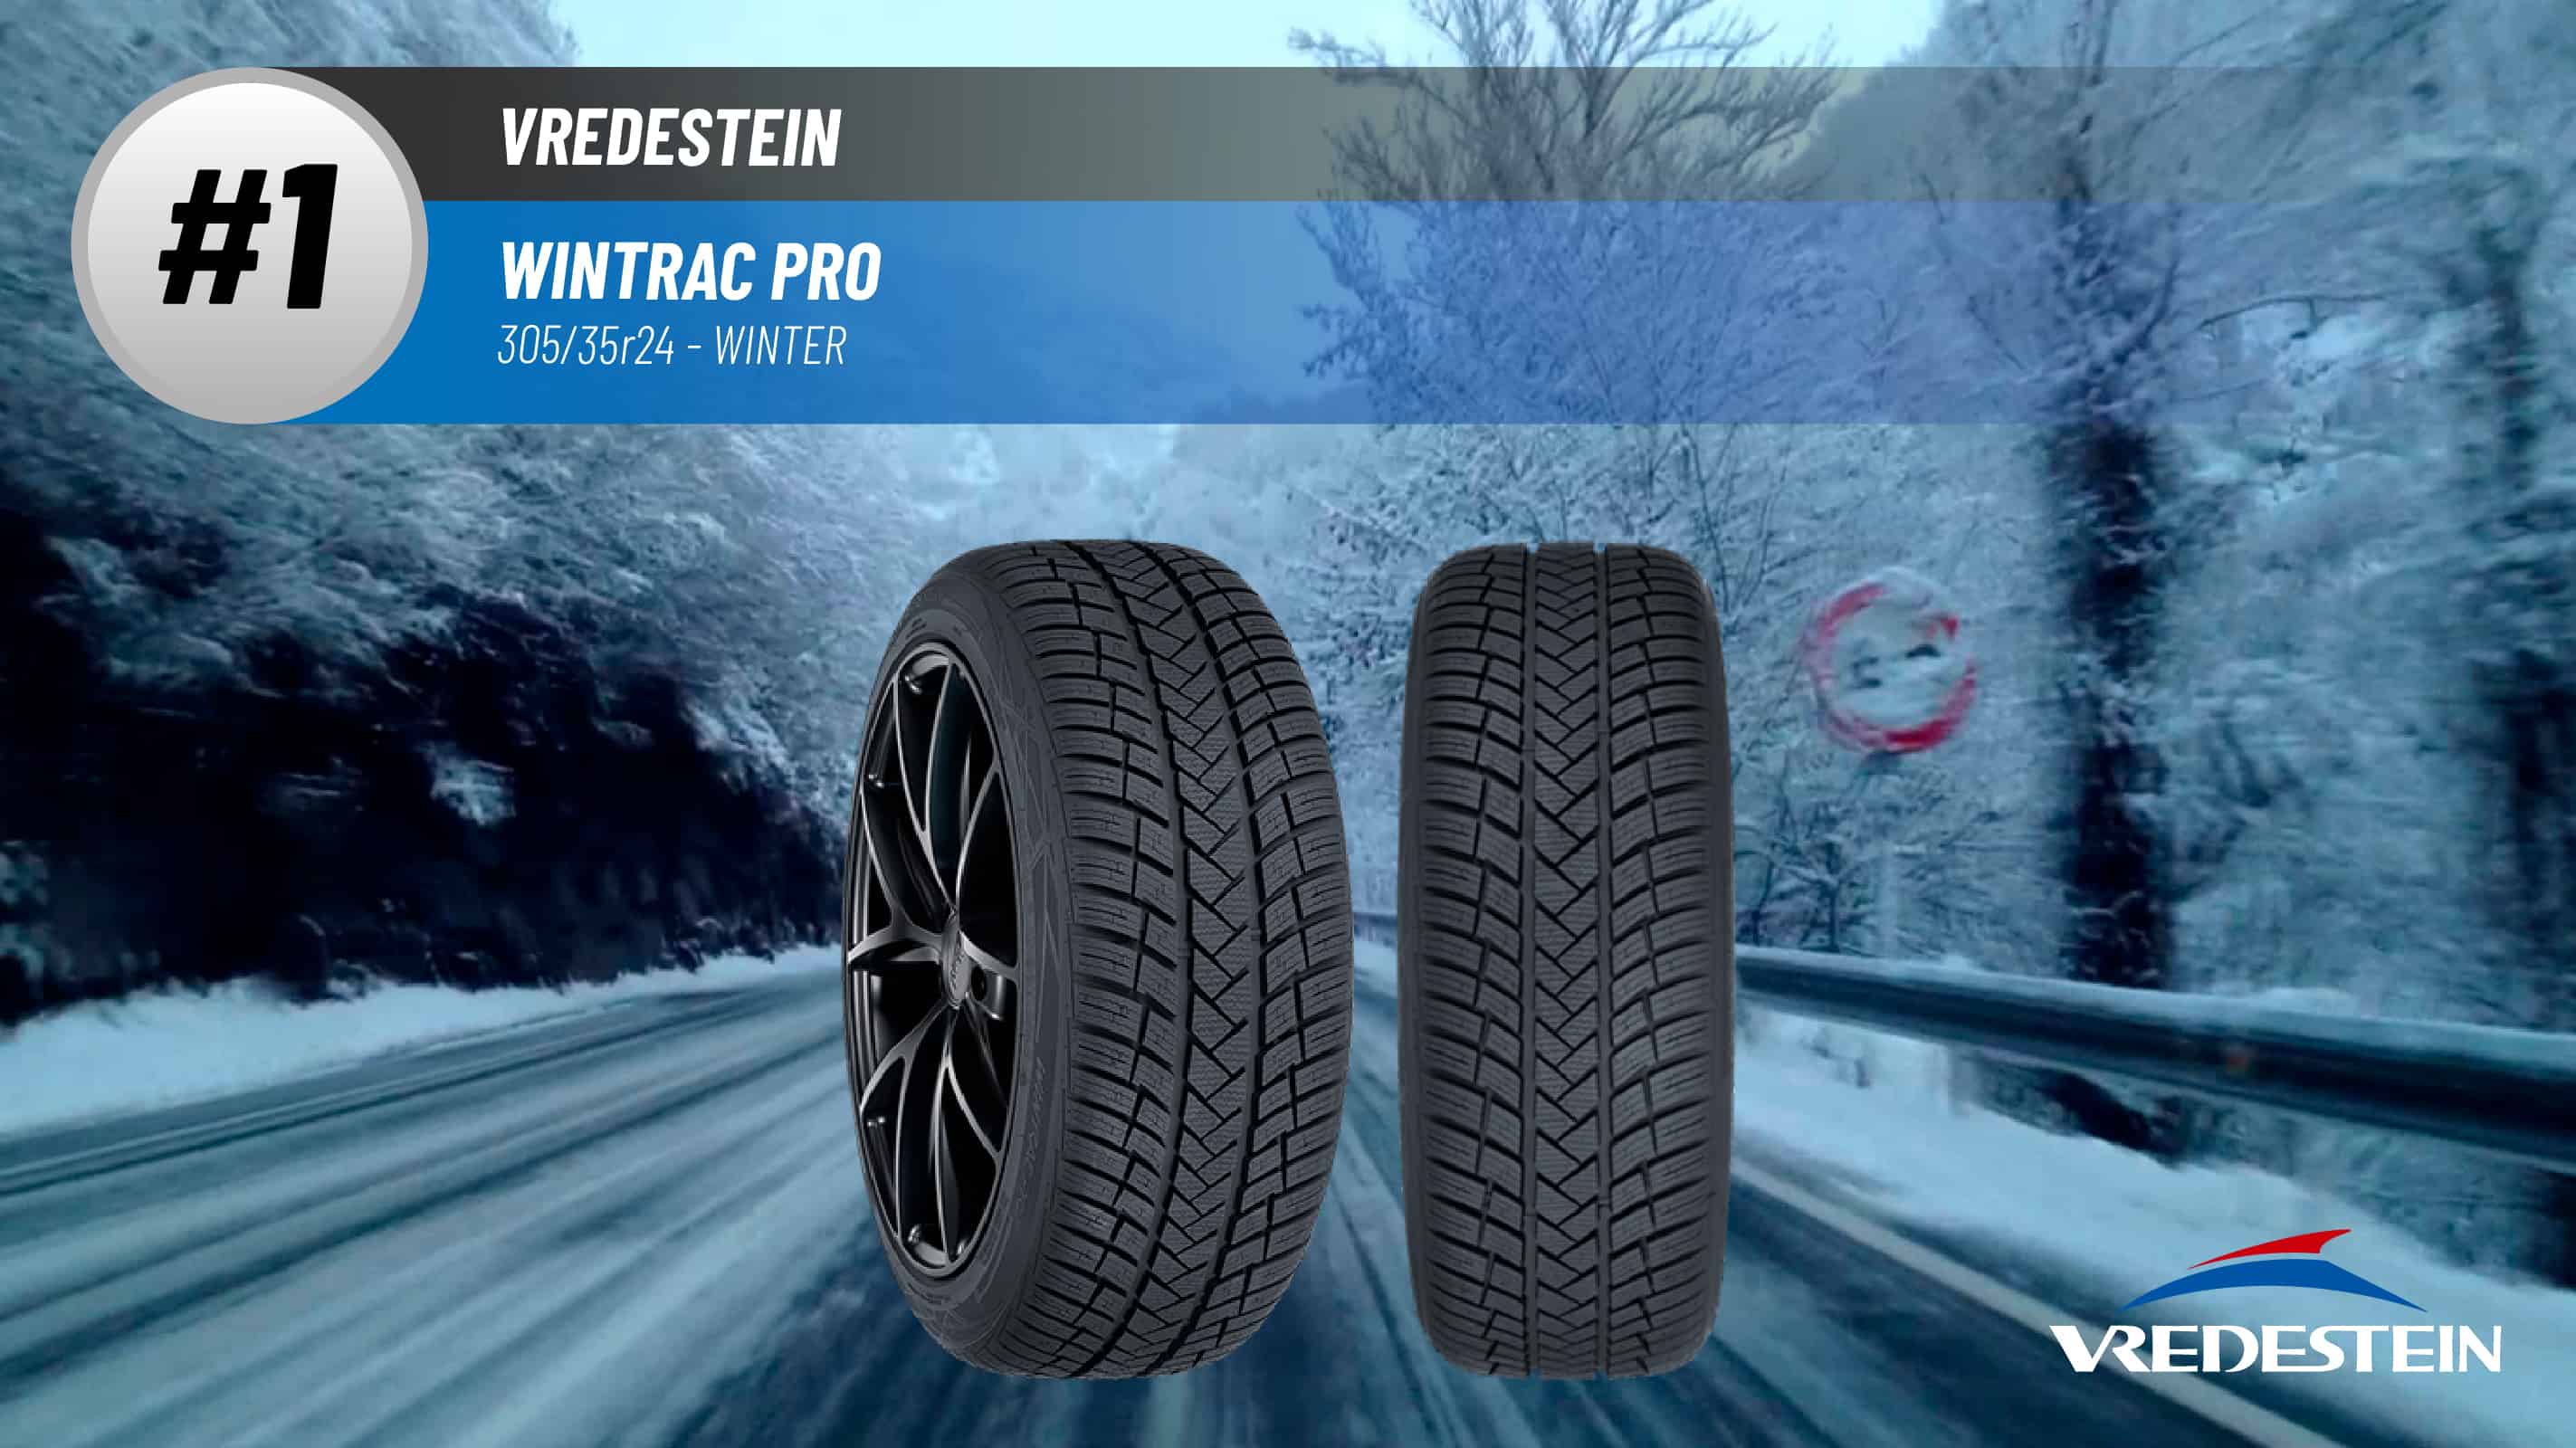 Top #1 Winter Tires: Vredestein Wintrac Pro – 305/35R24